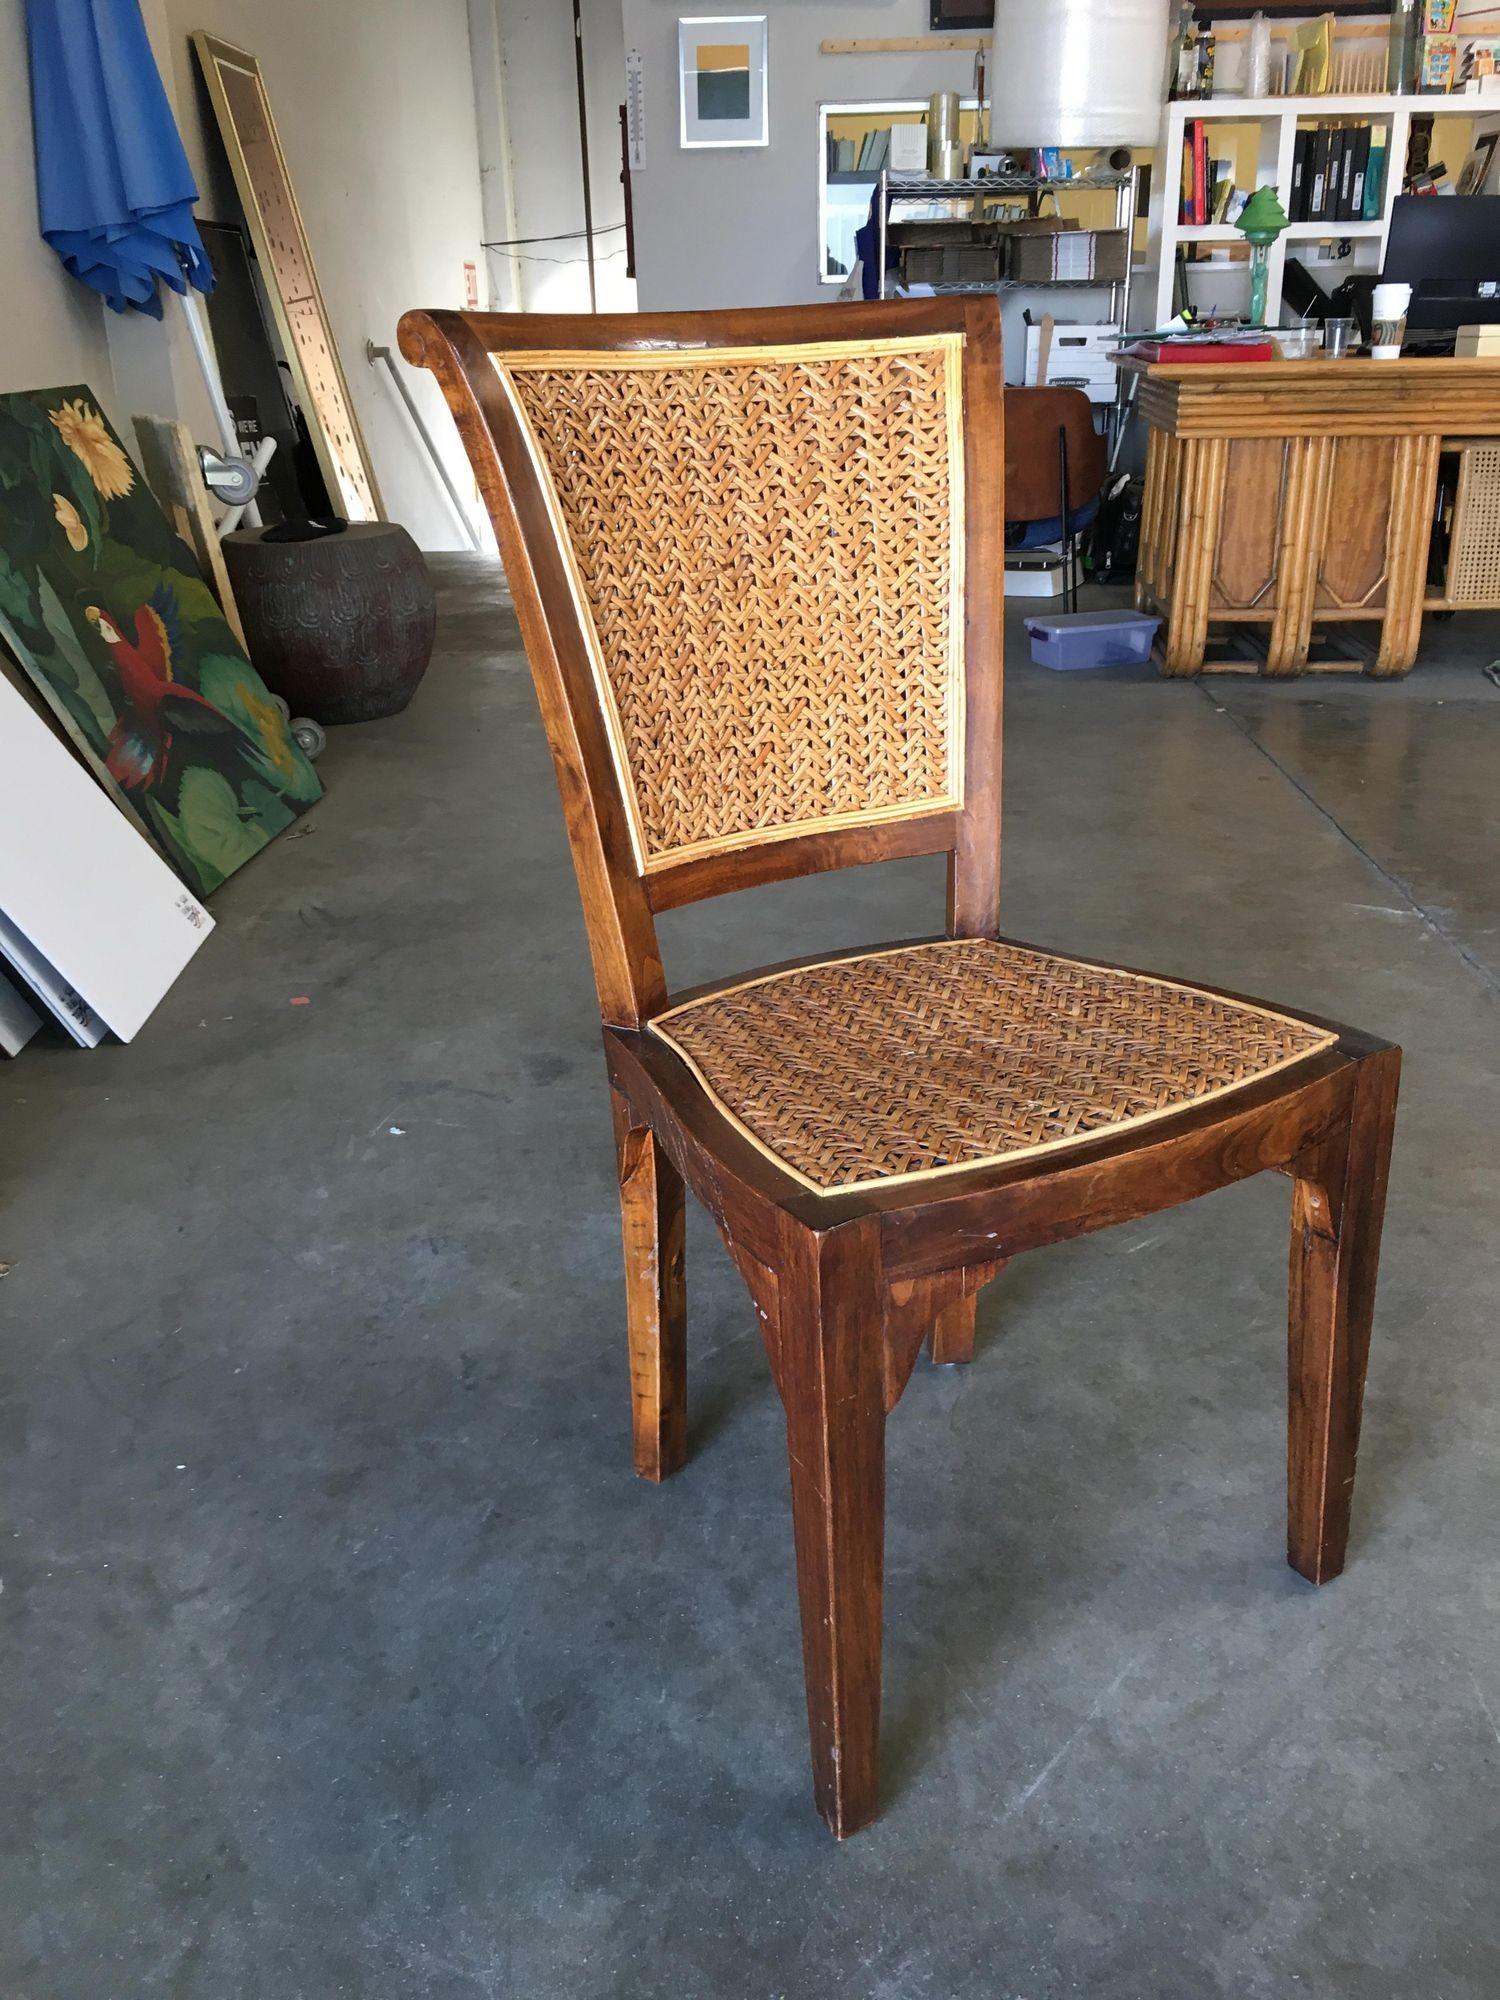 wicker bottom chairs